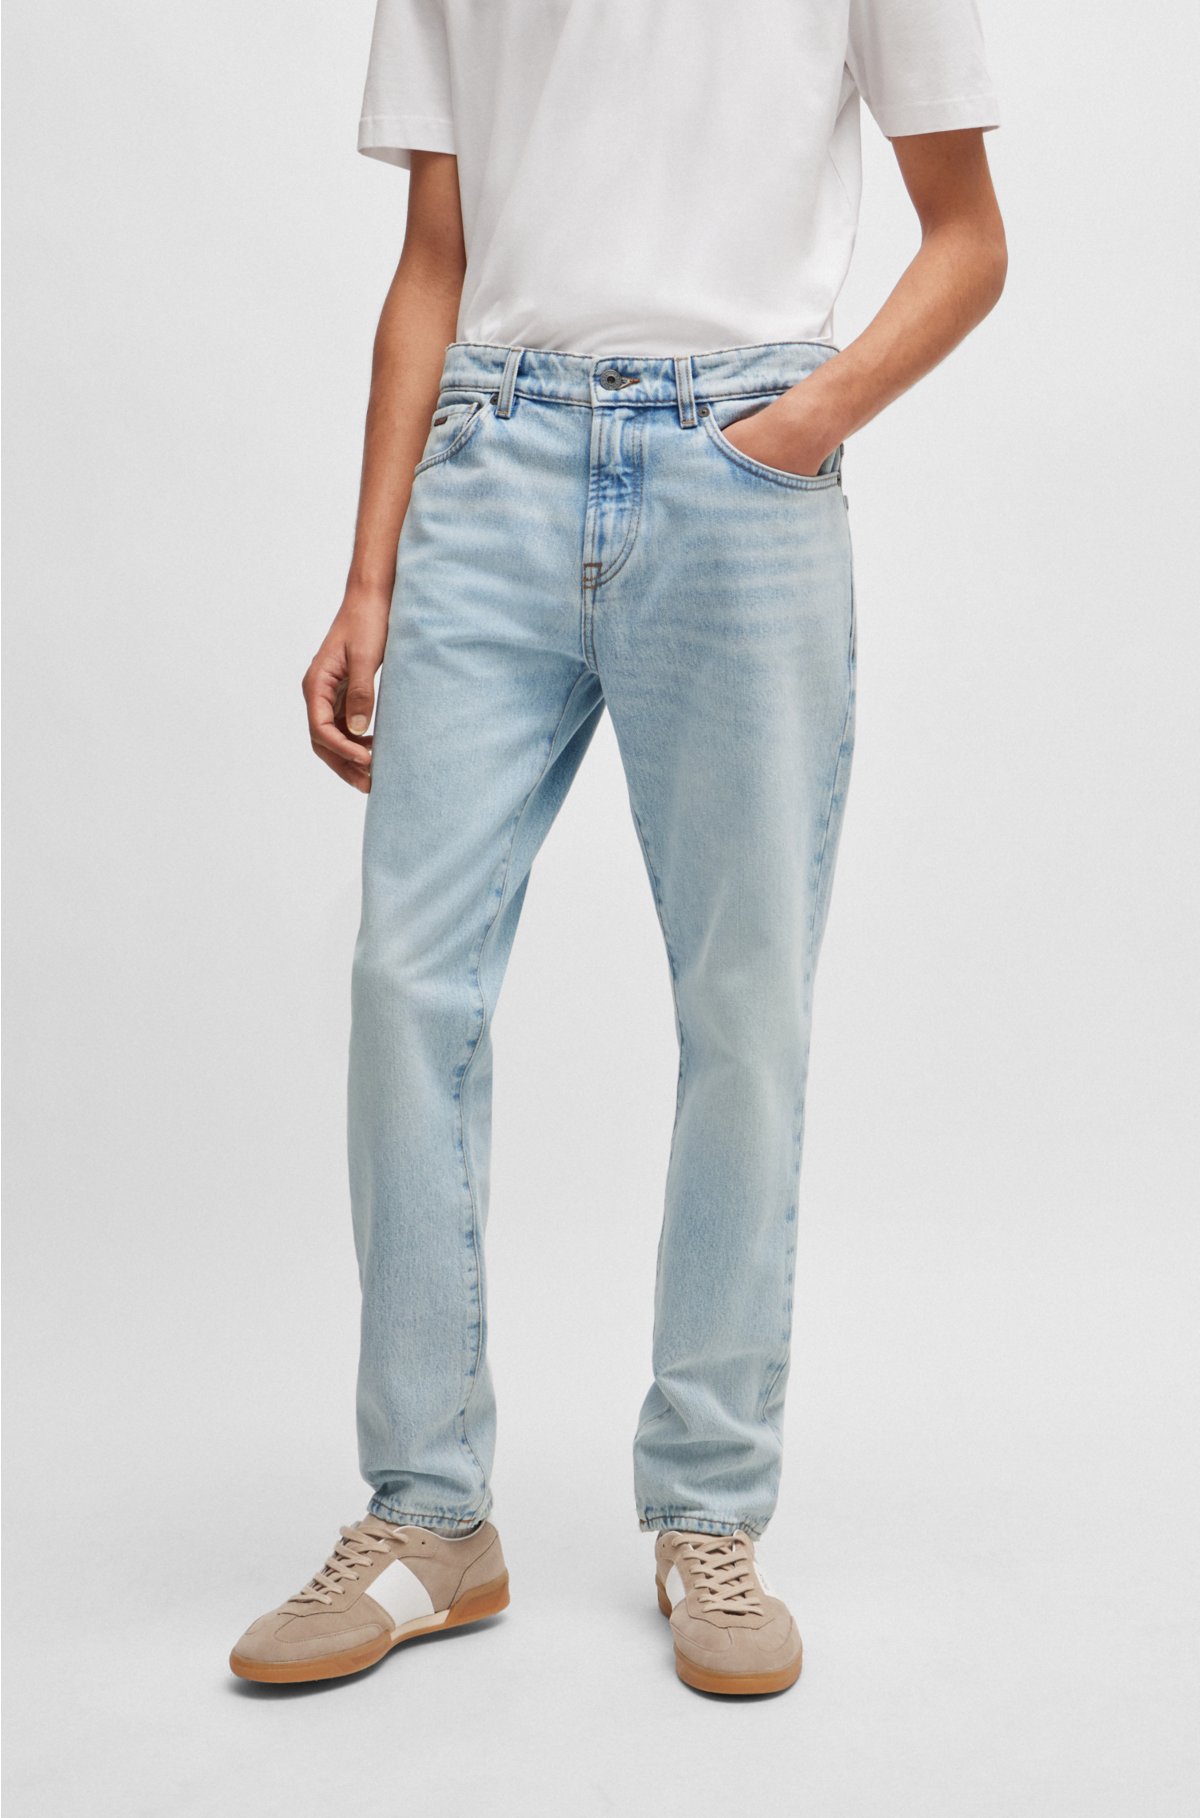 BOSS - Regular-fit jeans in blue rigid denim